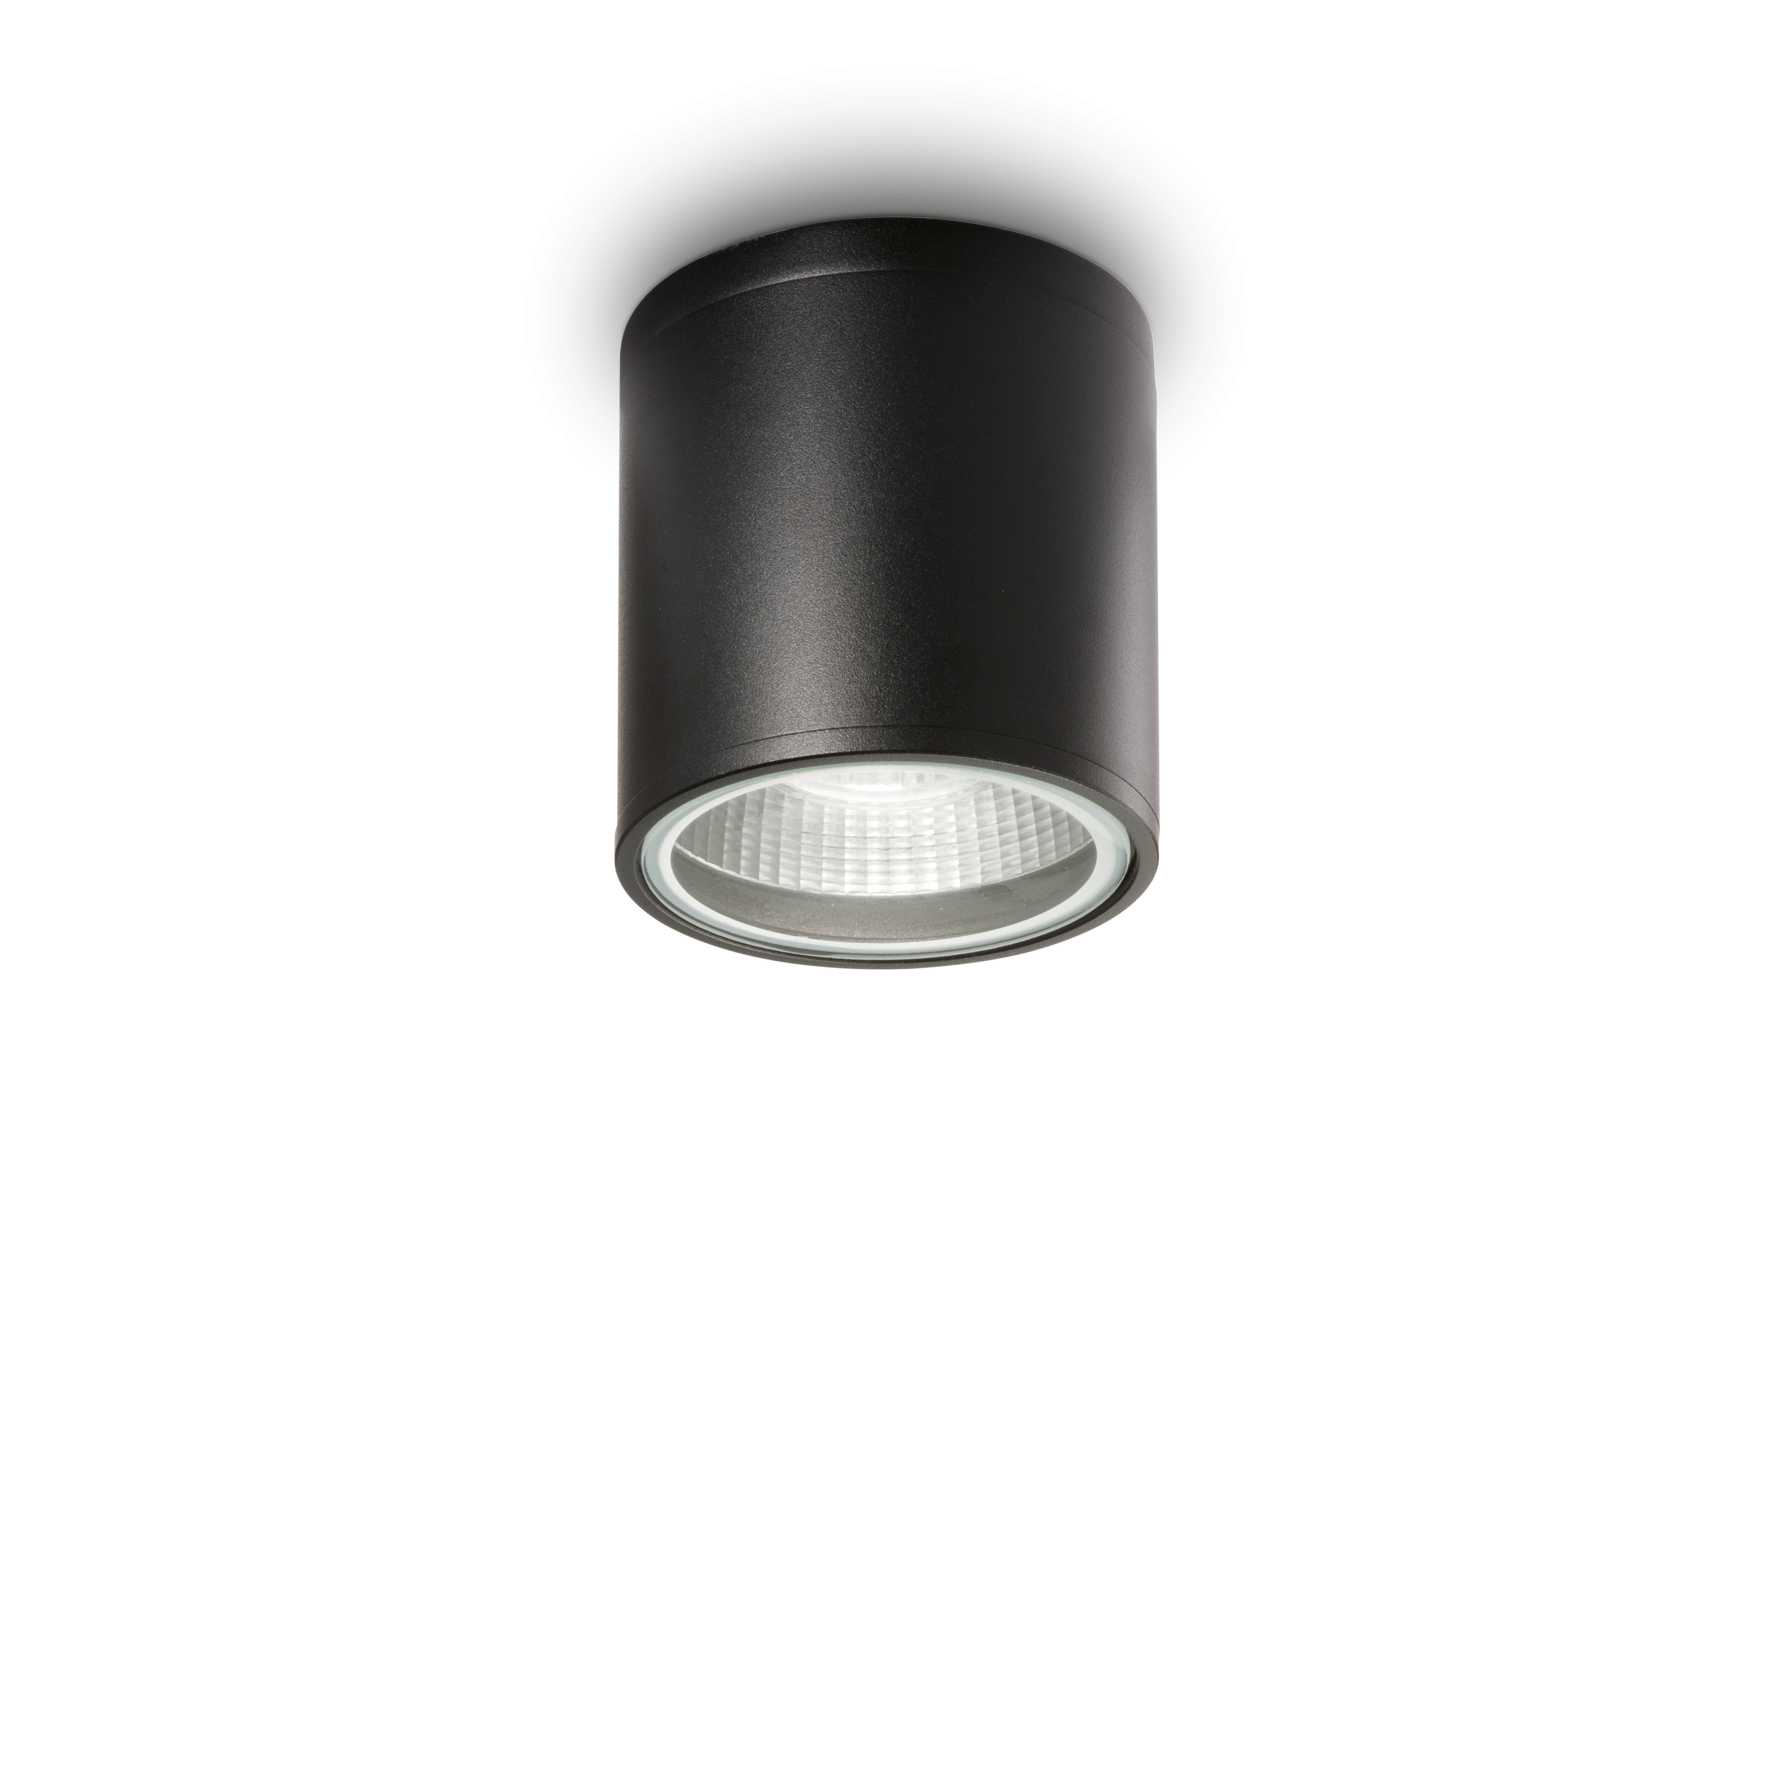 AD hotelska oprema Vanjka stropna lampa Gun pl1- Crne boje slika proizvoda